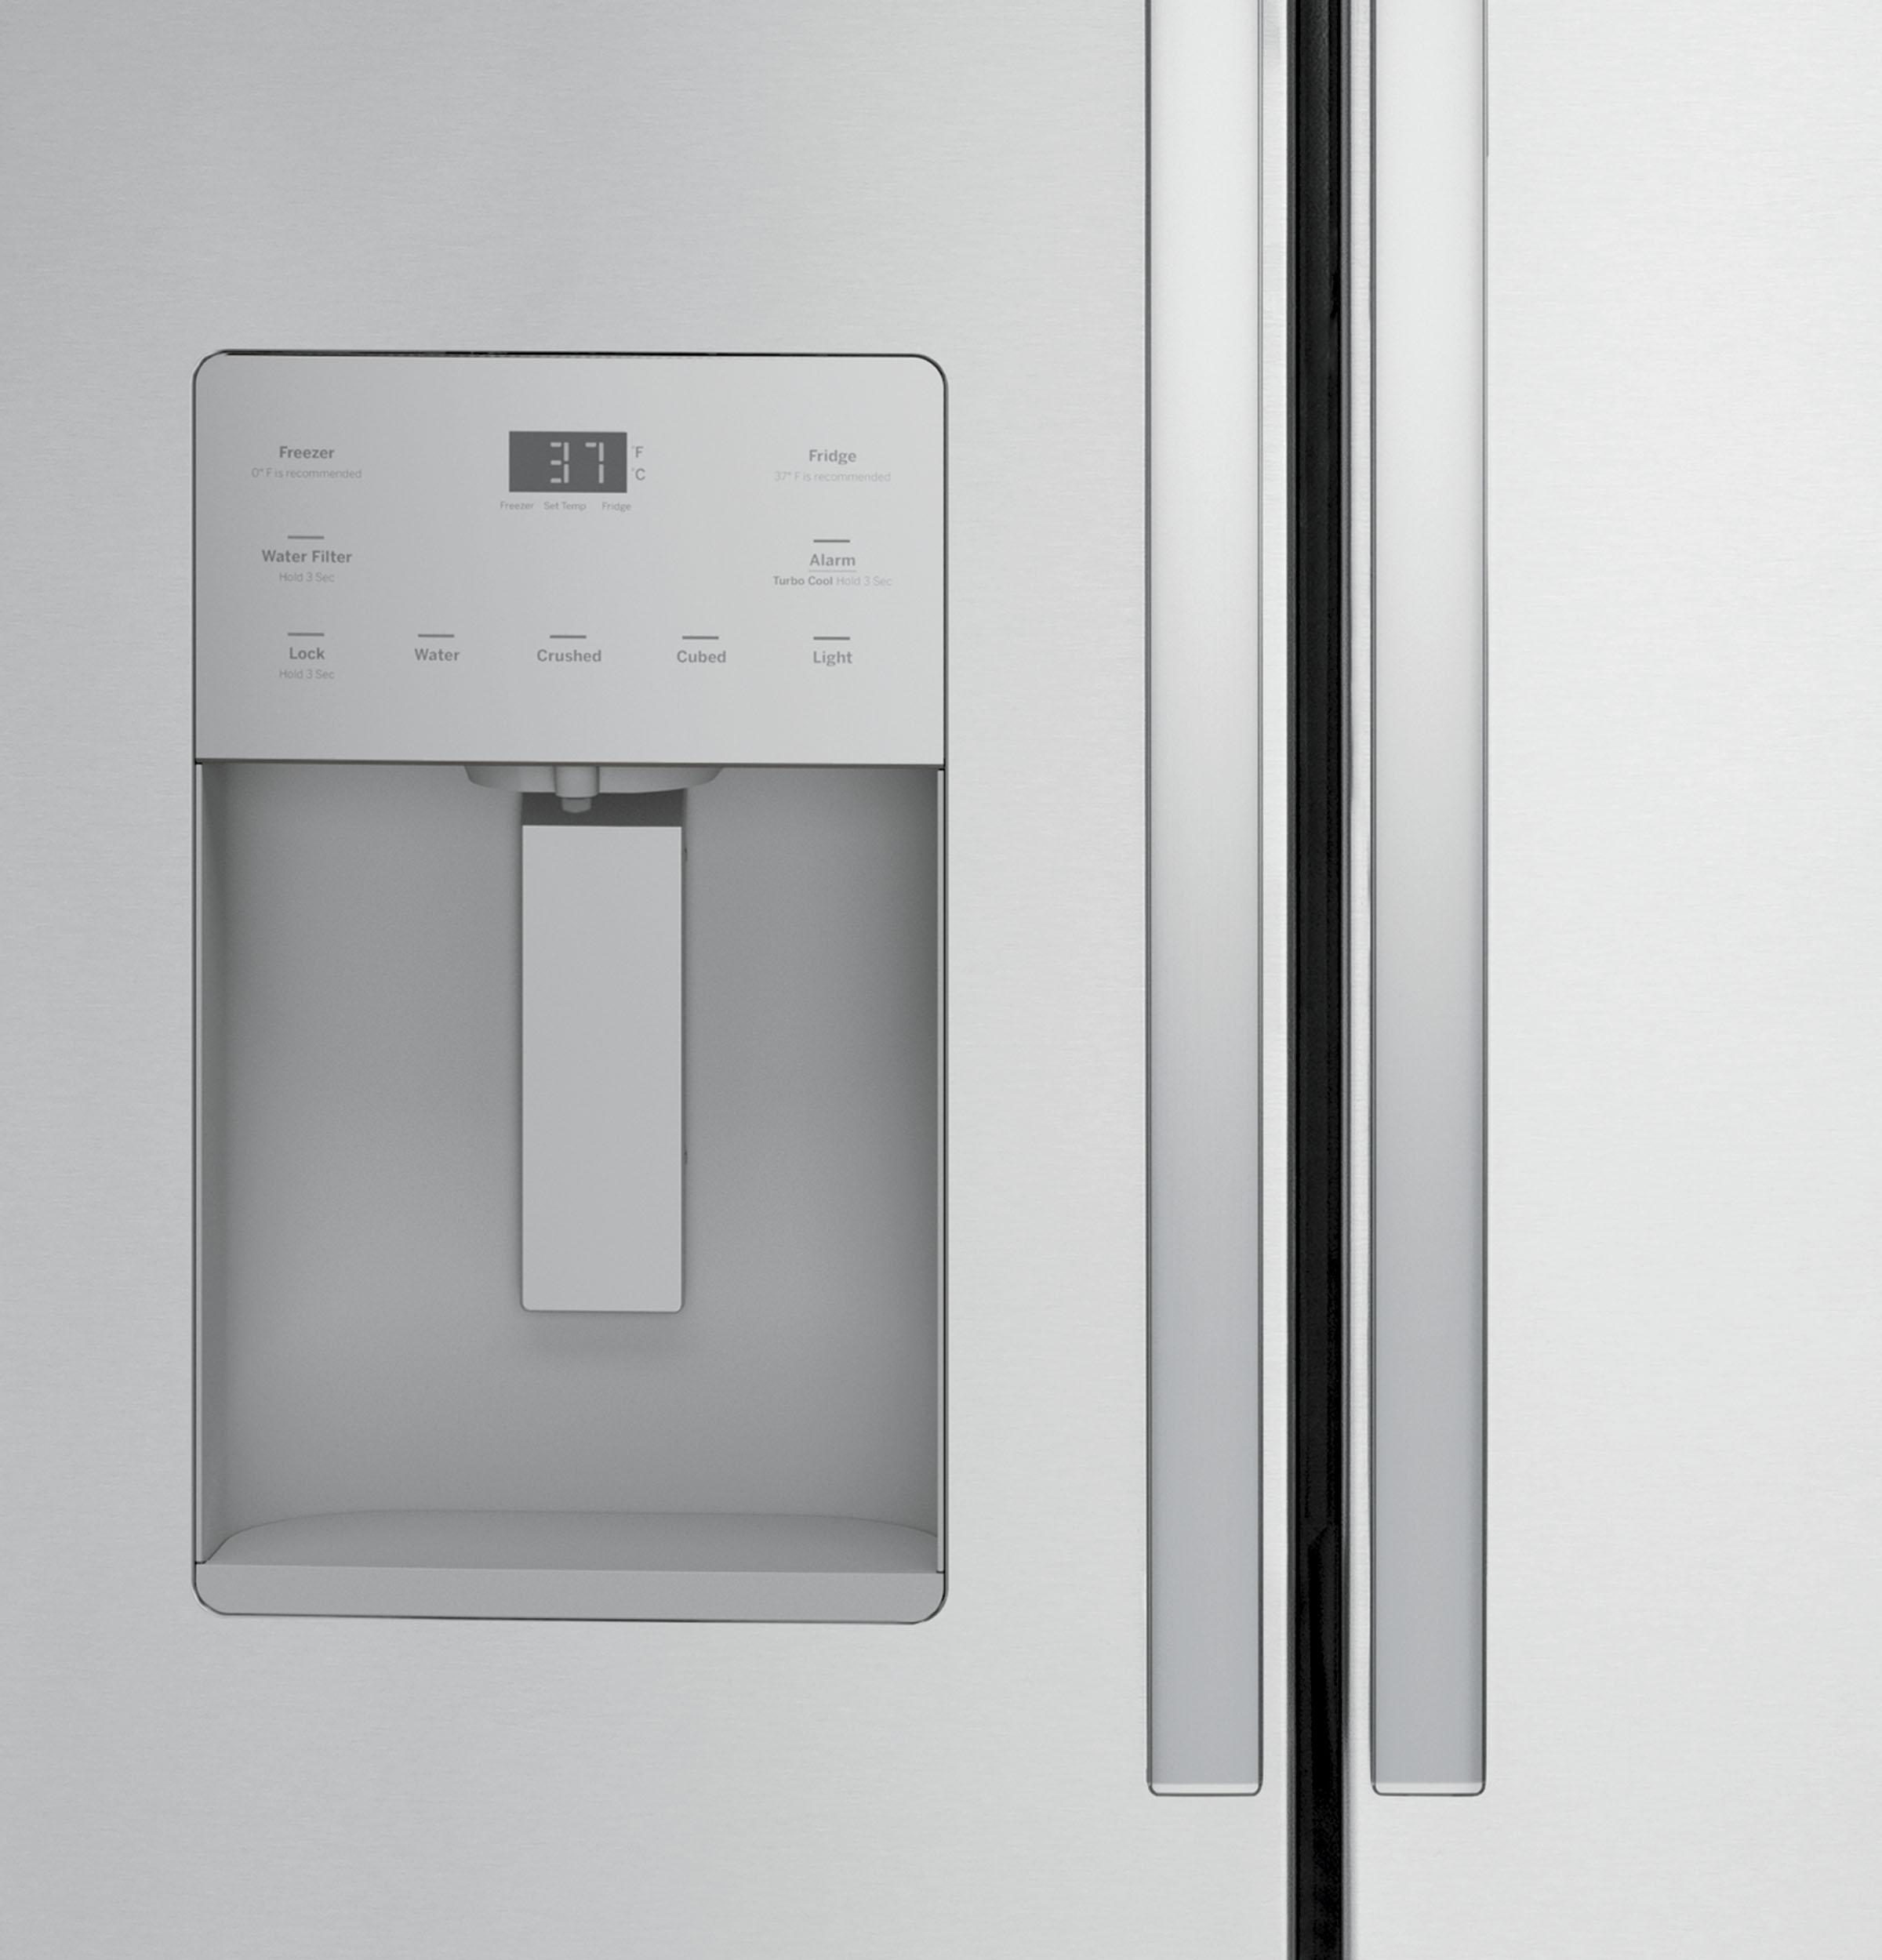 GE® ENERGY STAR® 25.7 Cu. Ft. Fingerprint Resistant French-Door Refrigerator